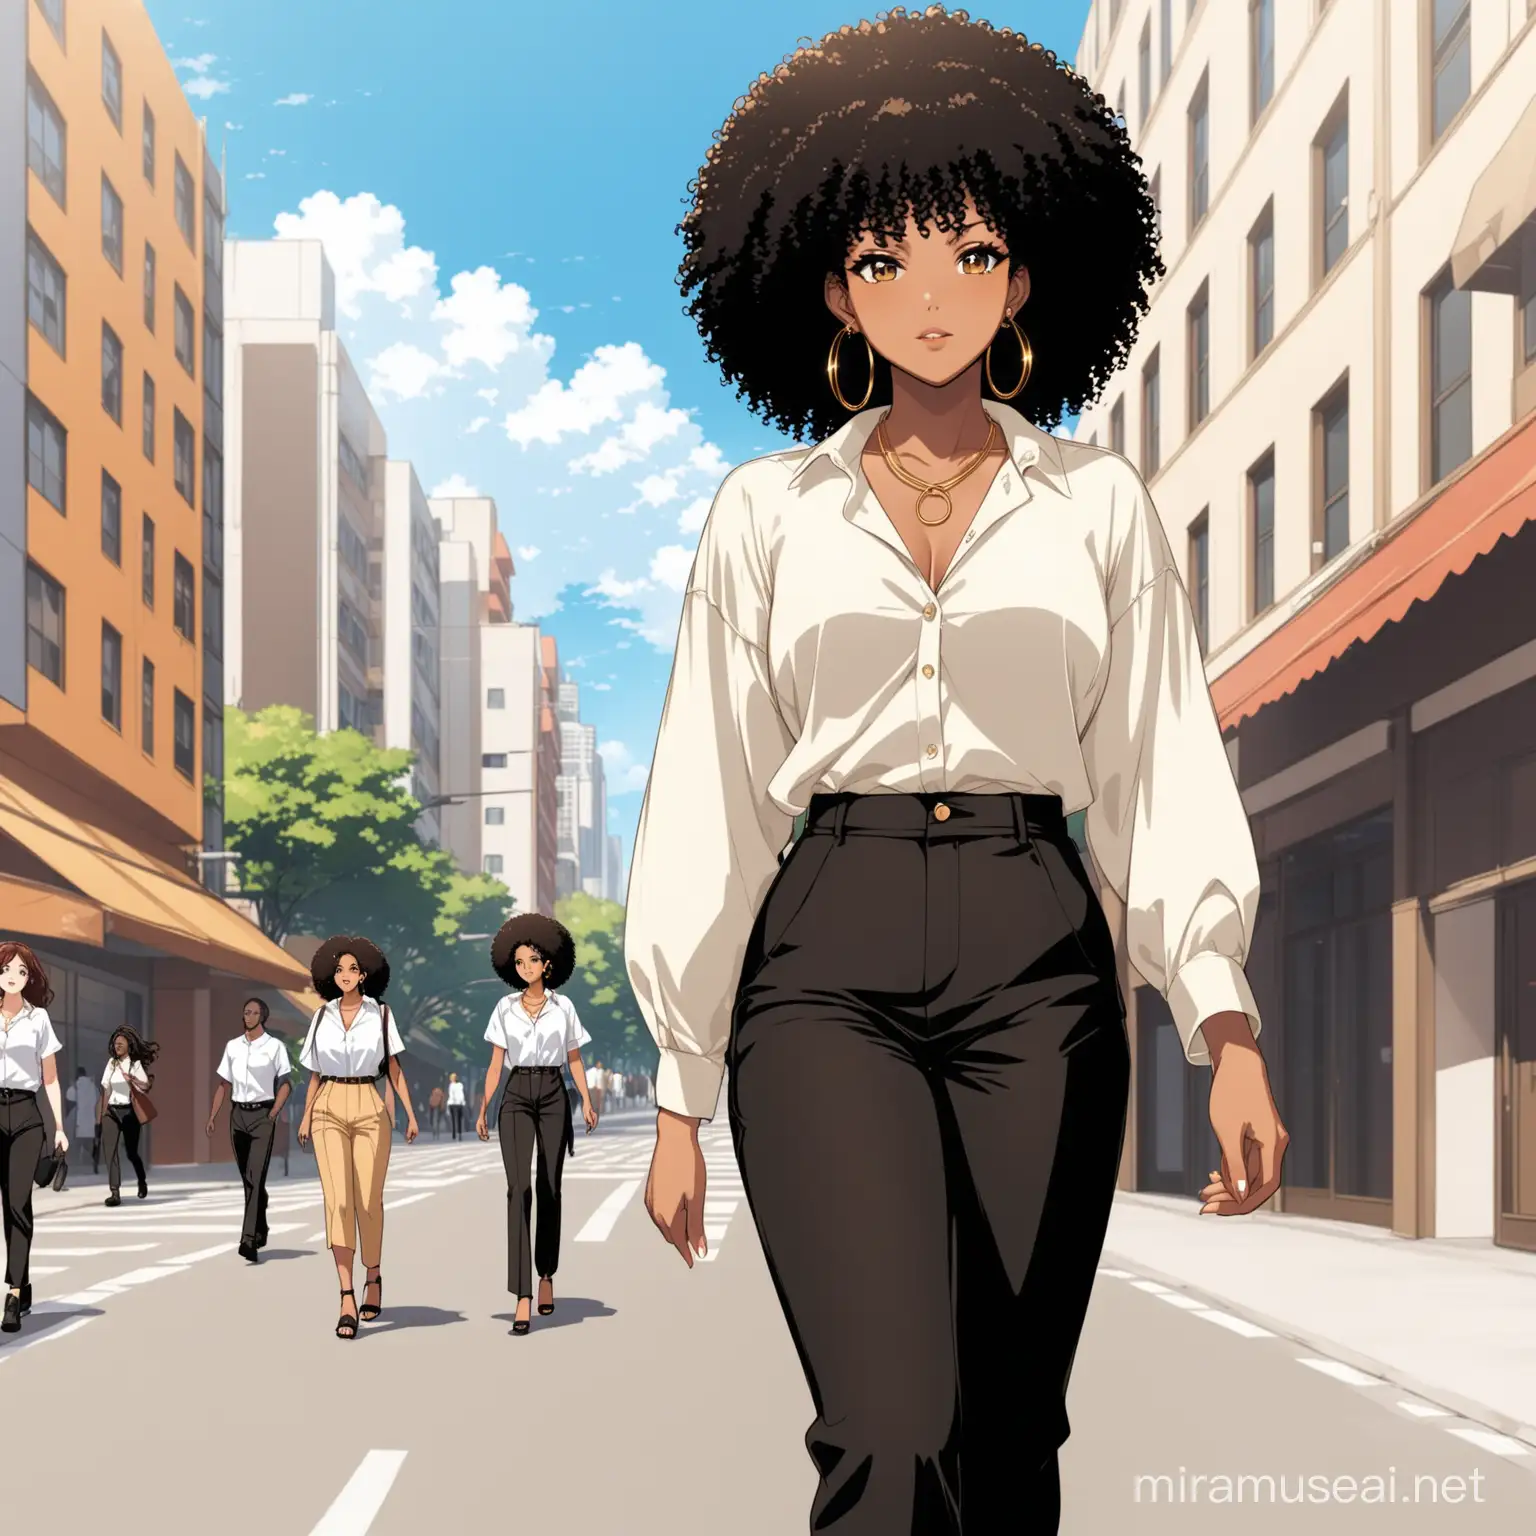 African Anime Woman Strolling in Urban Chic Attire